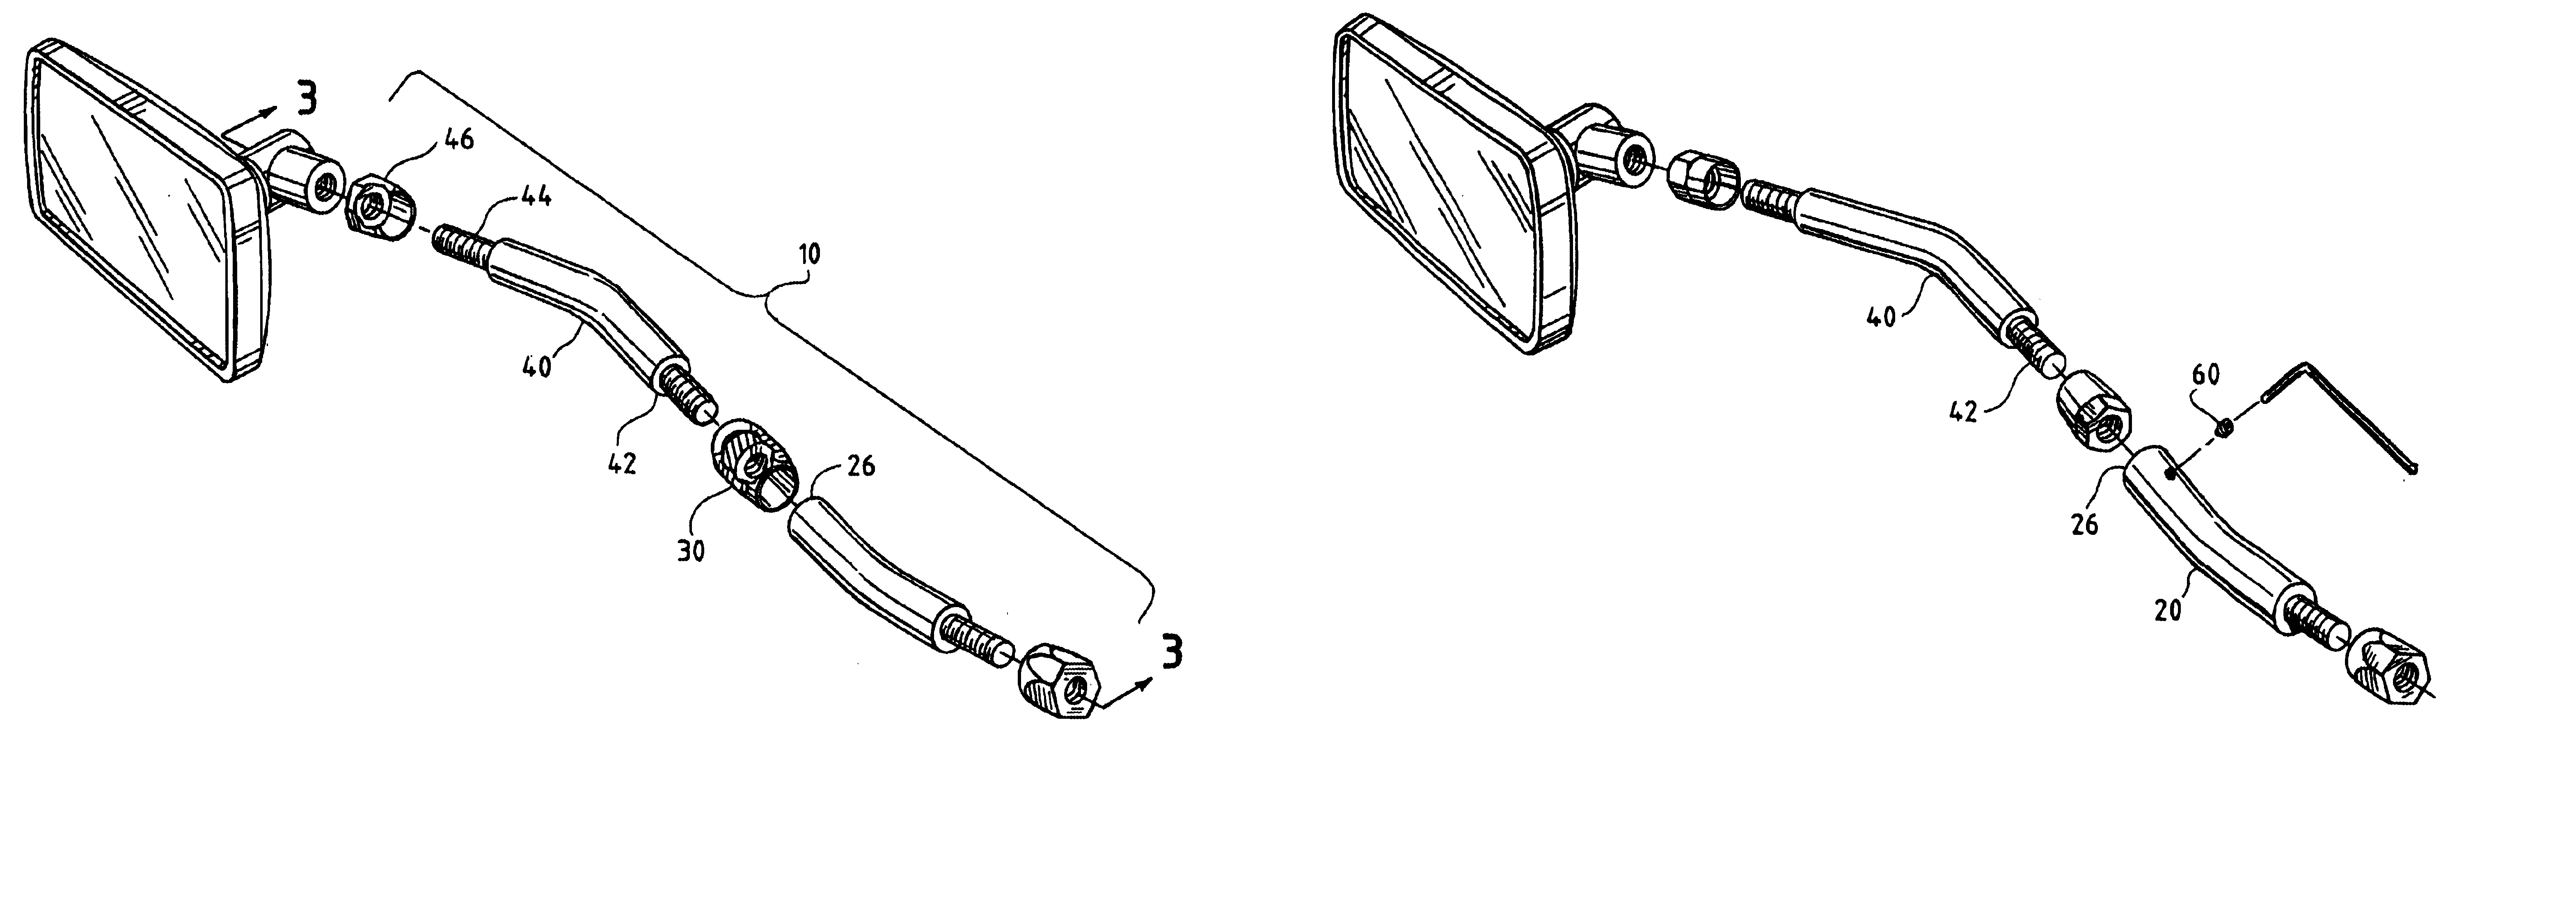 Adjustable vehicle attachment stem